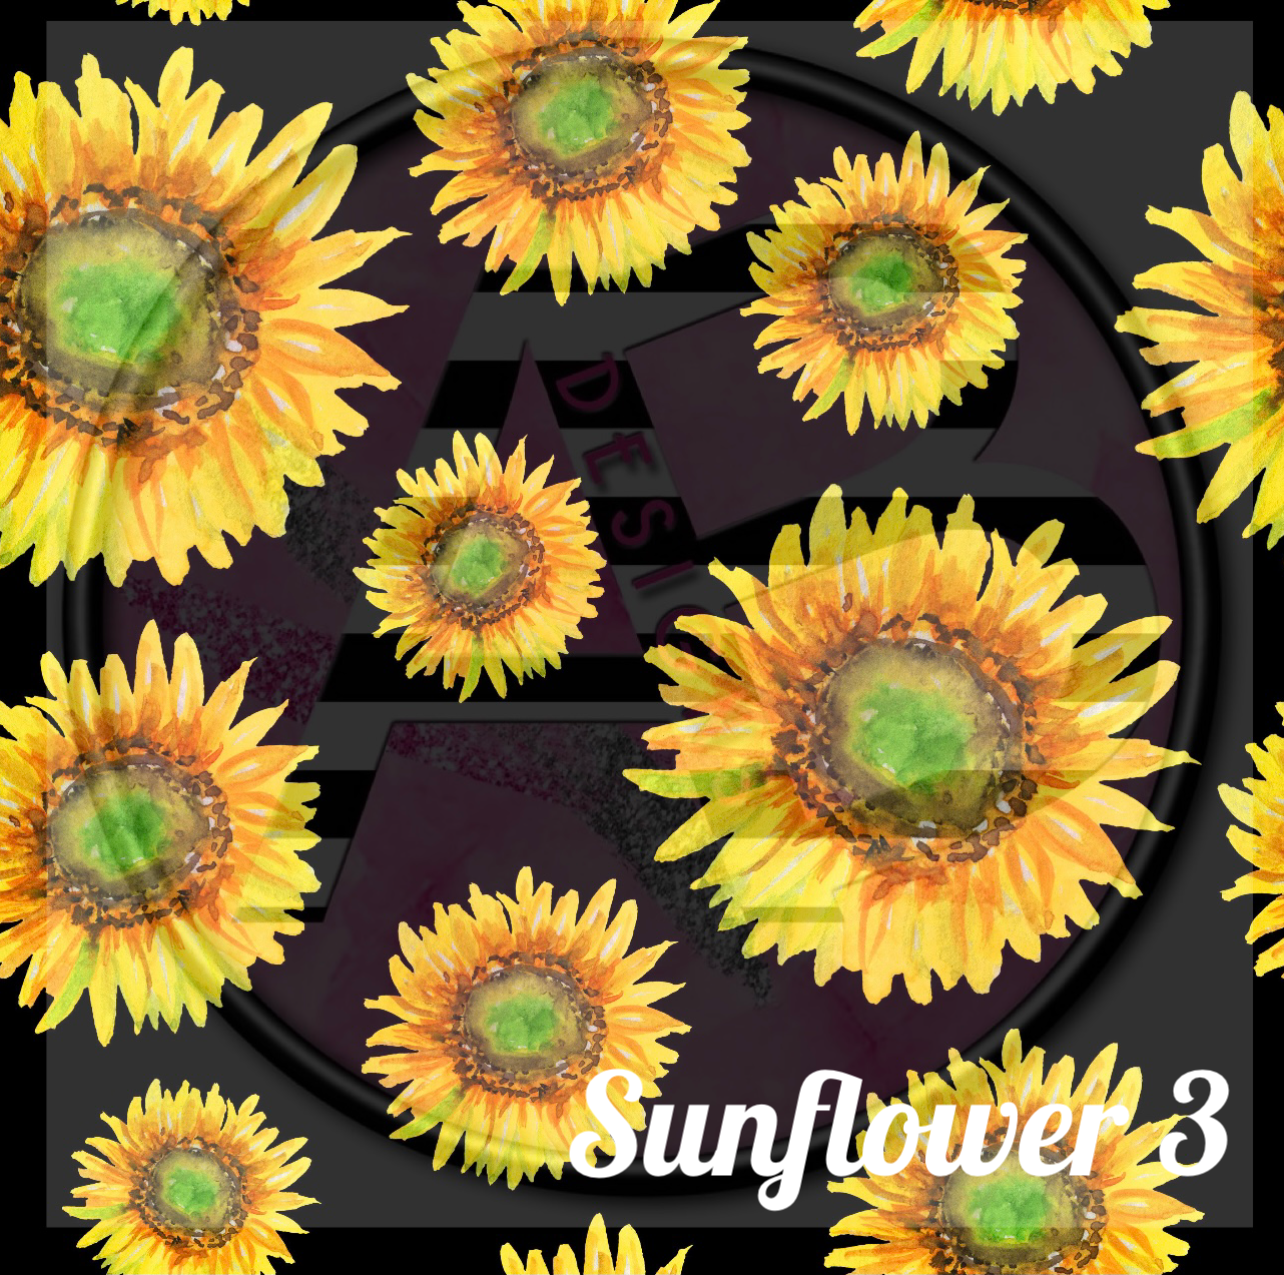 Adhesive Patterned Vinyl - Sunflower 3